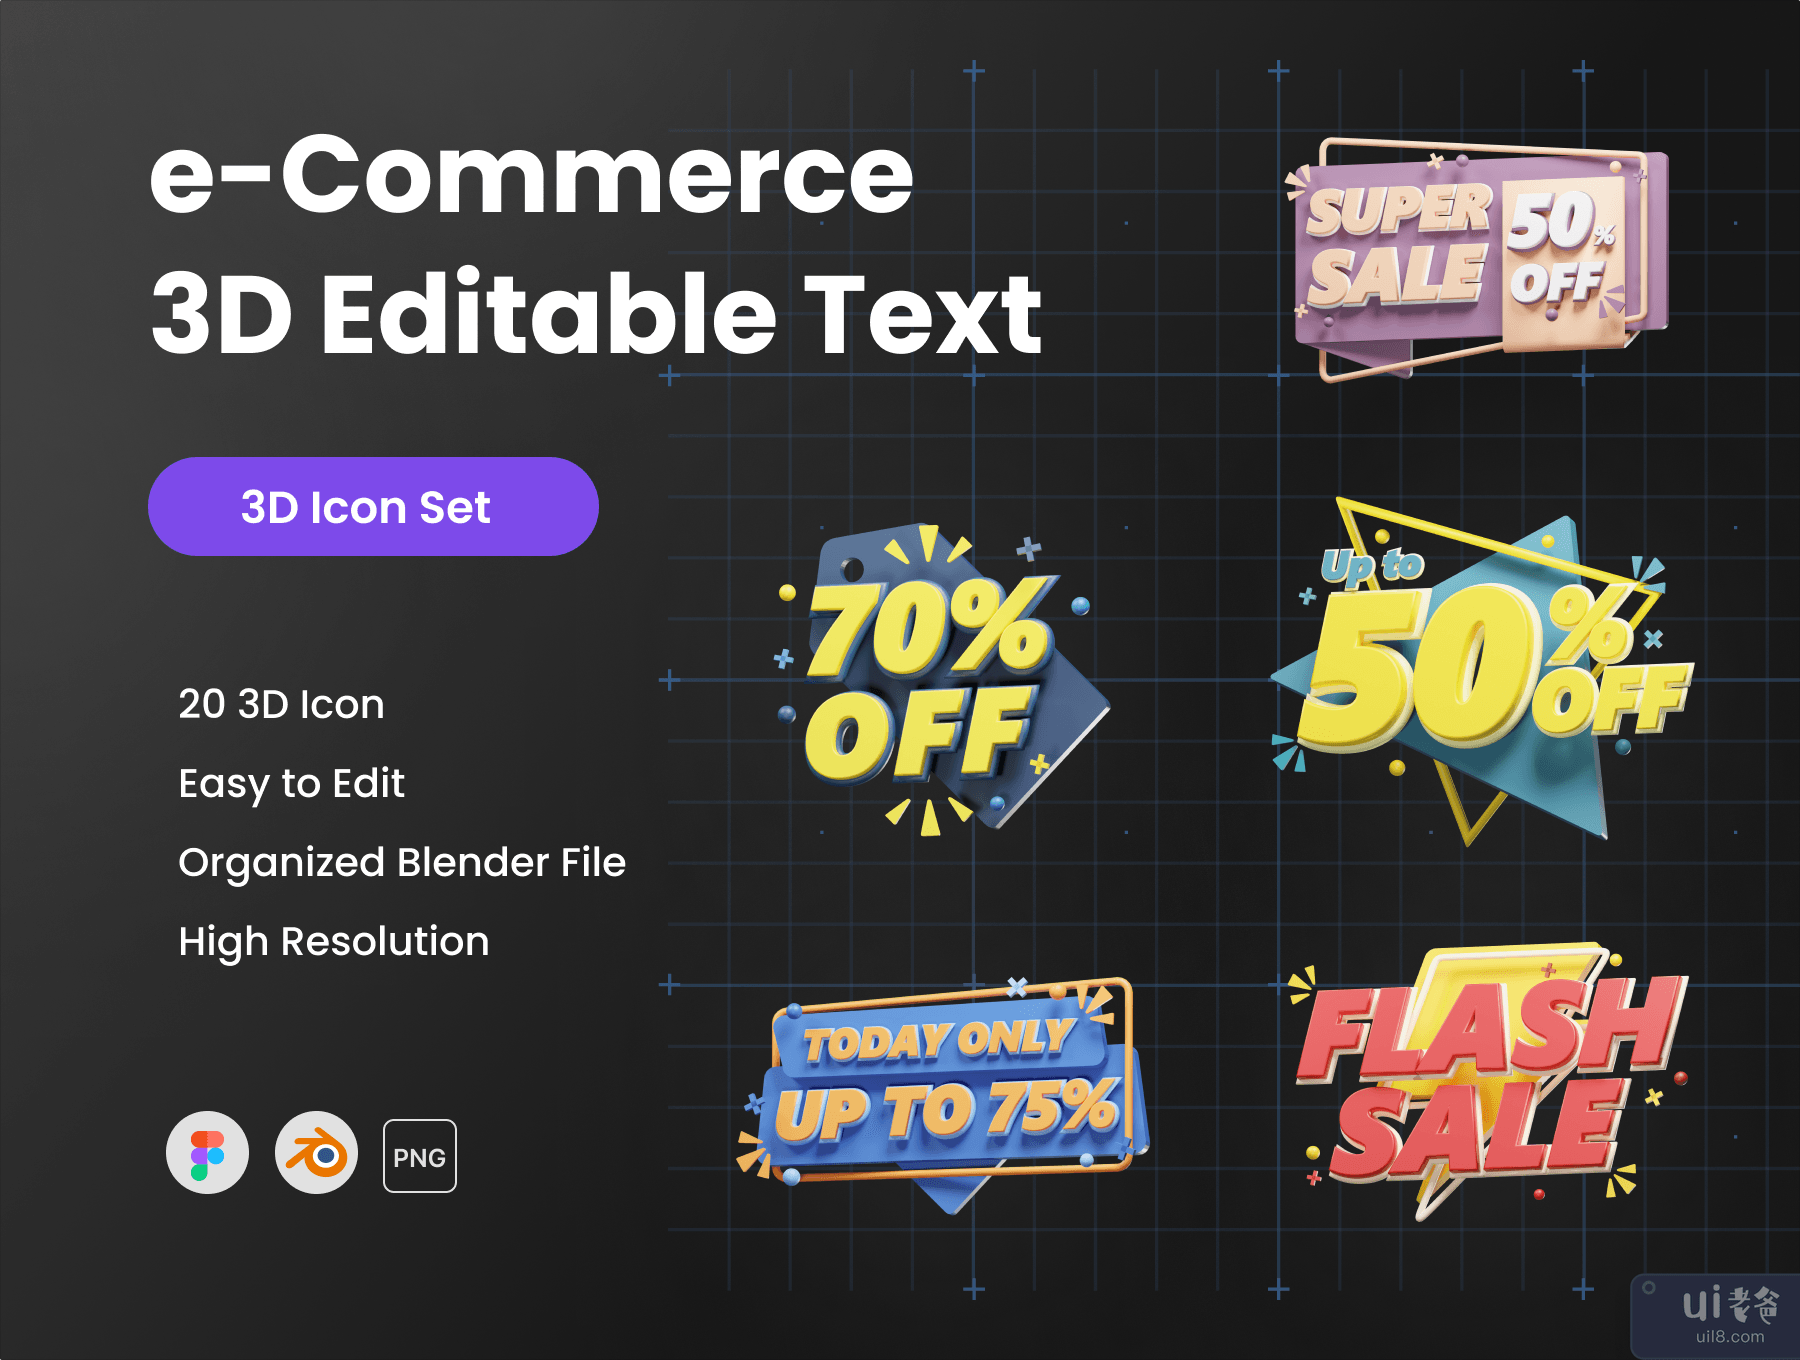 电子商务 3D 可编辑文本 (e-Commerce 3D Editable Text)插图5